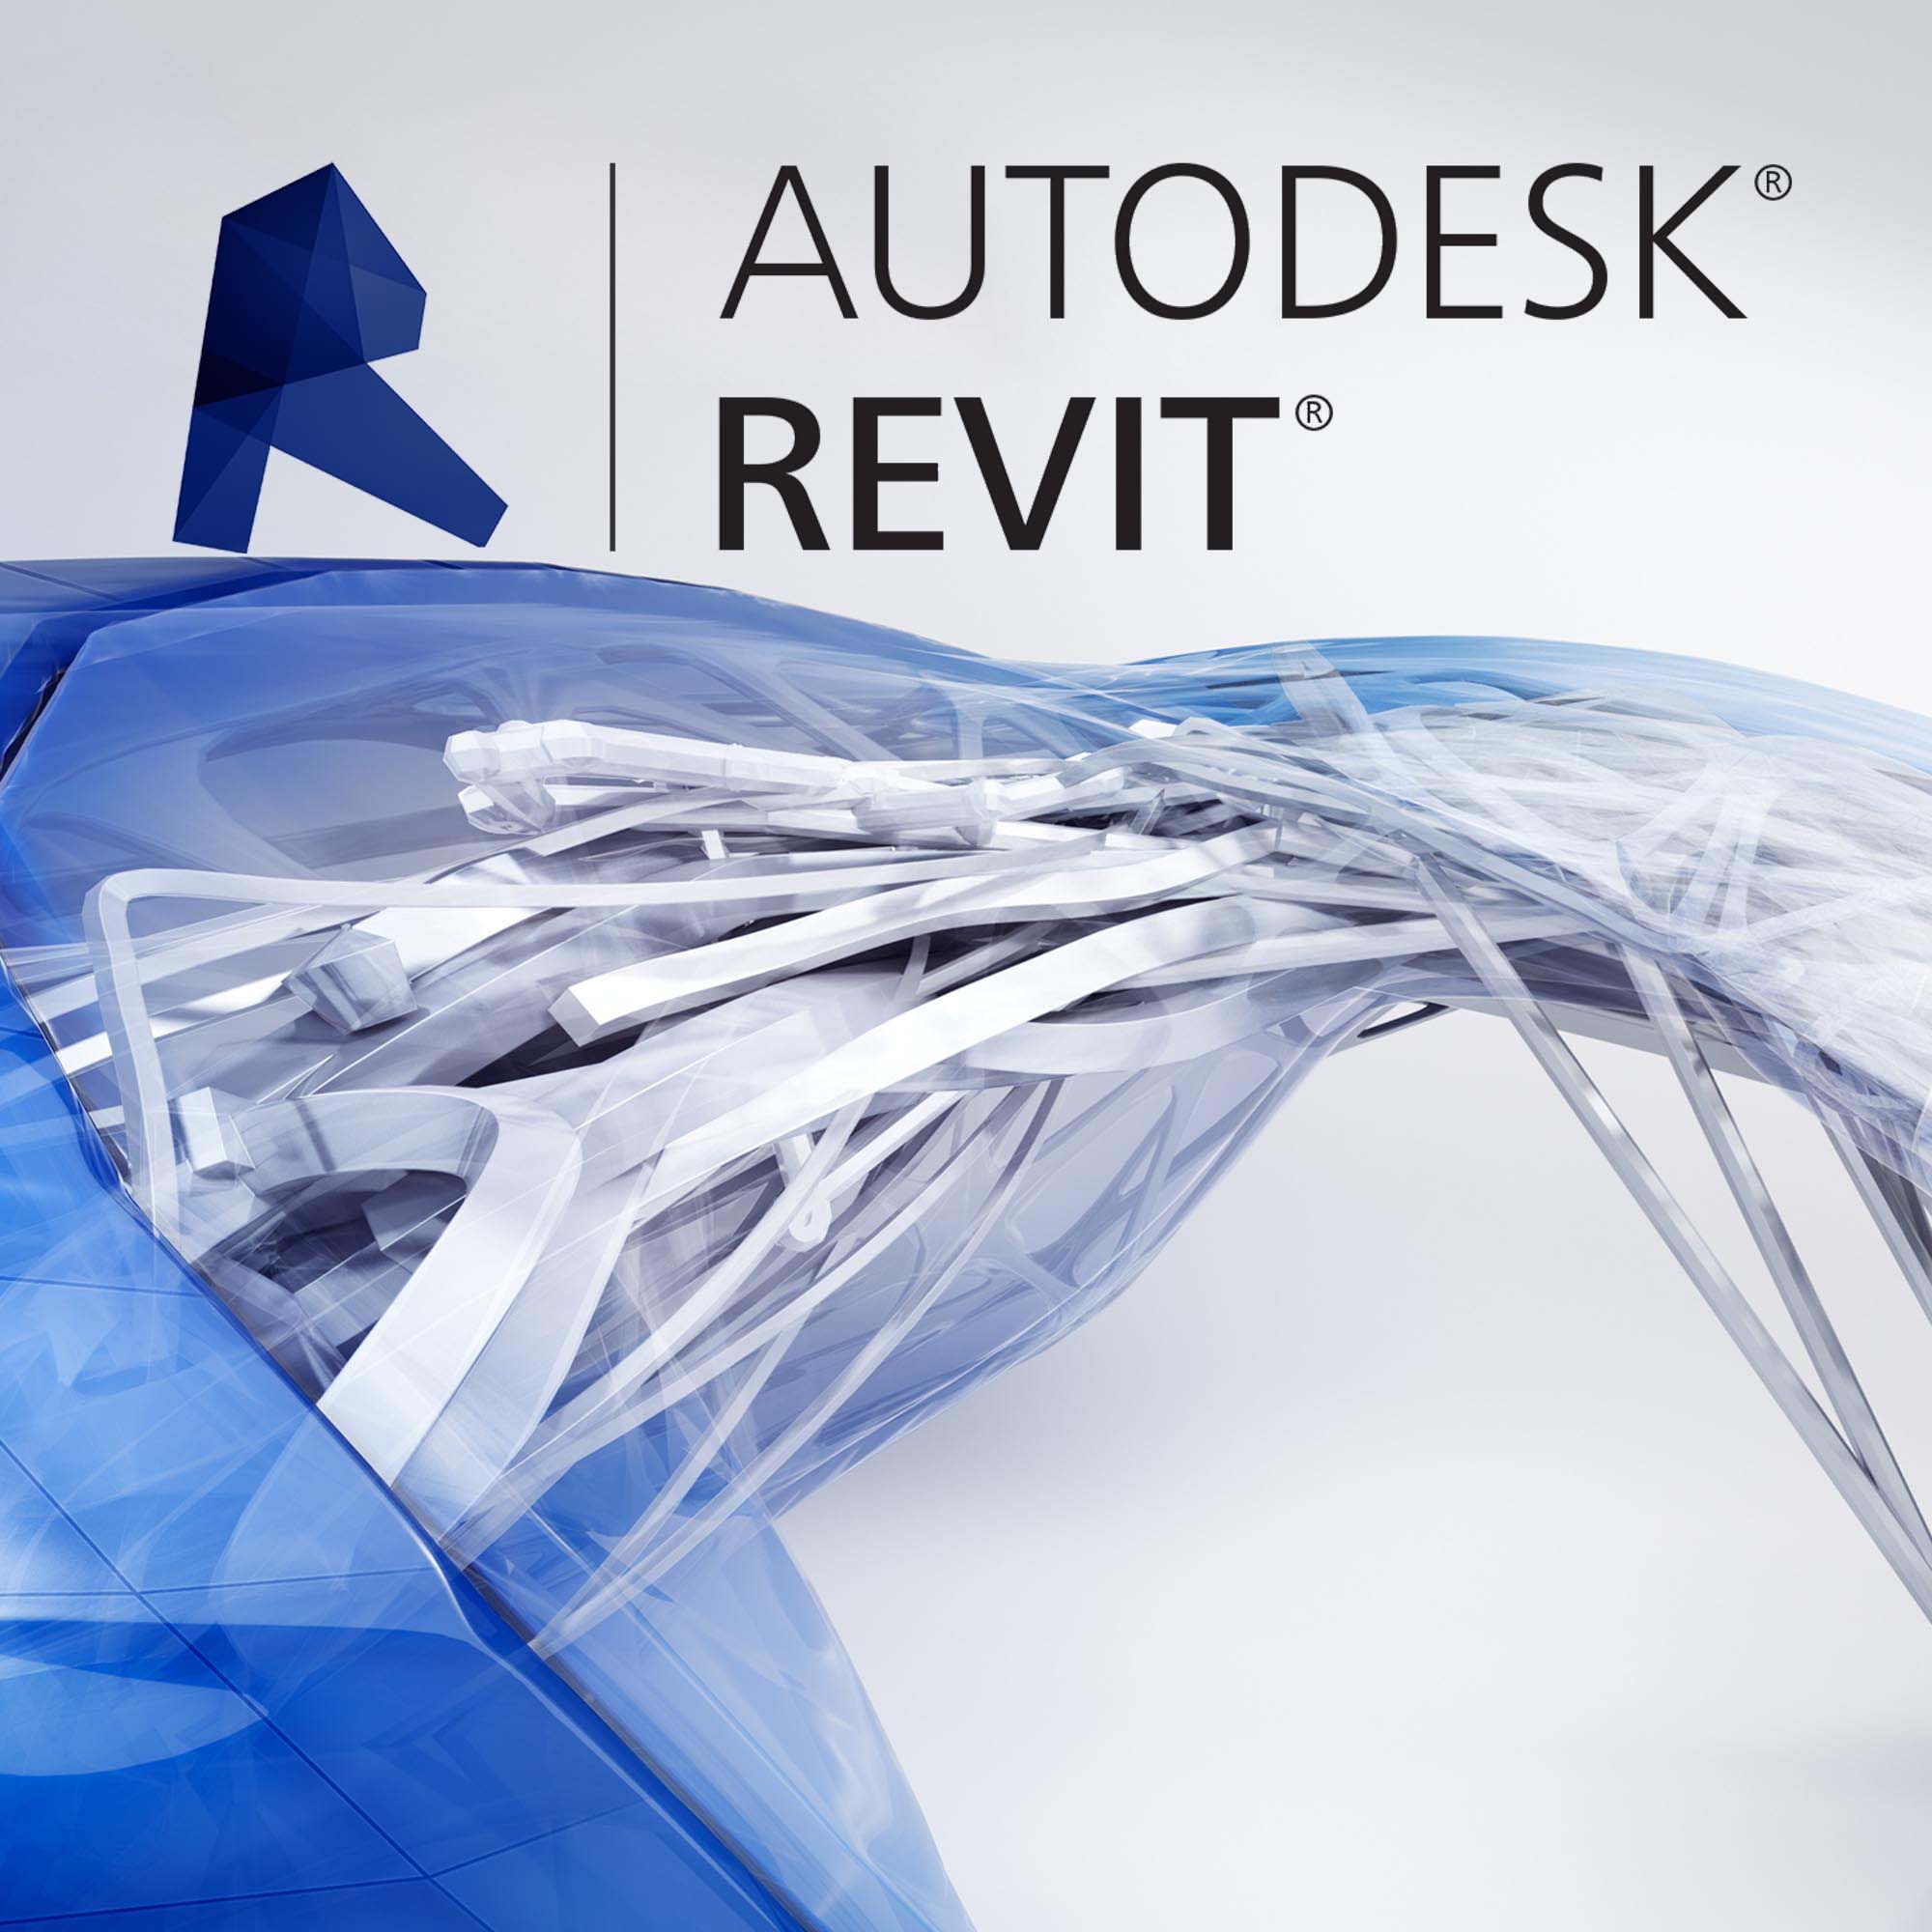 Autodesk Revit 2020 Crack